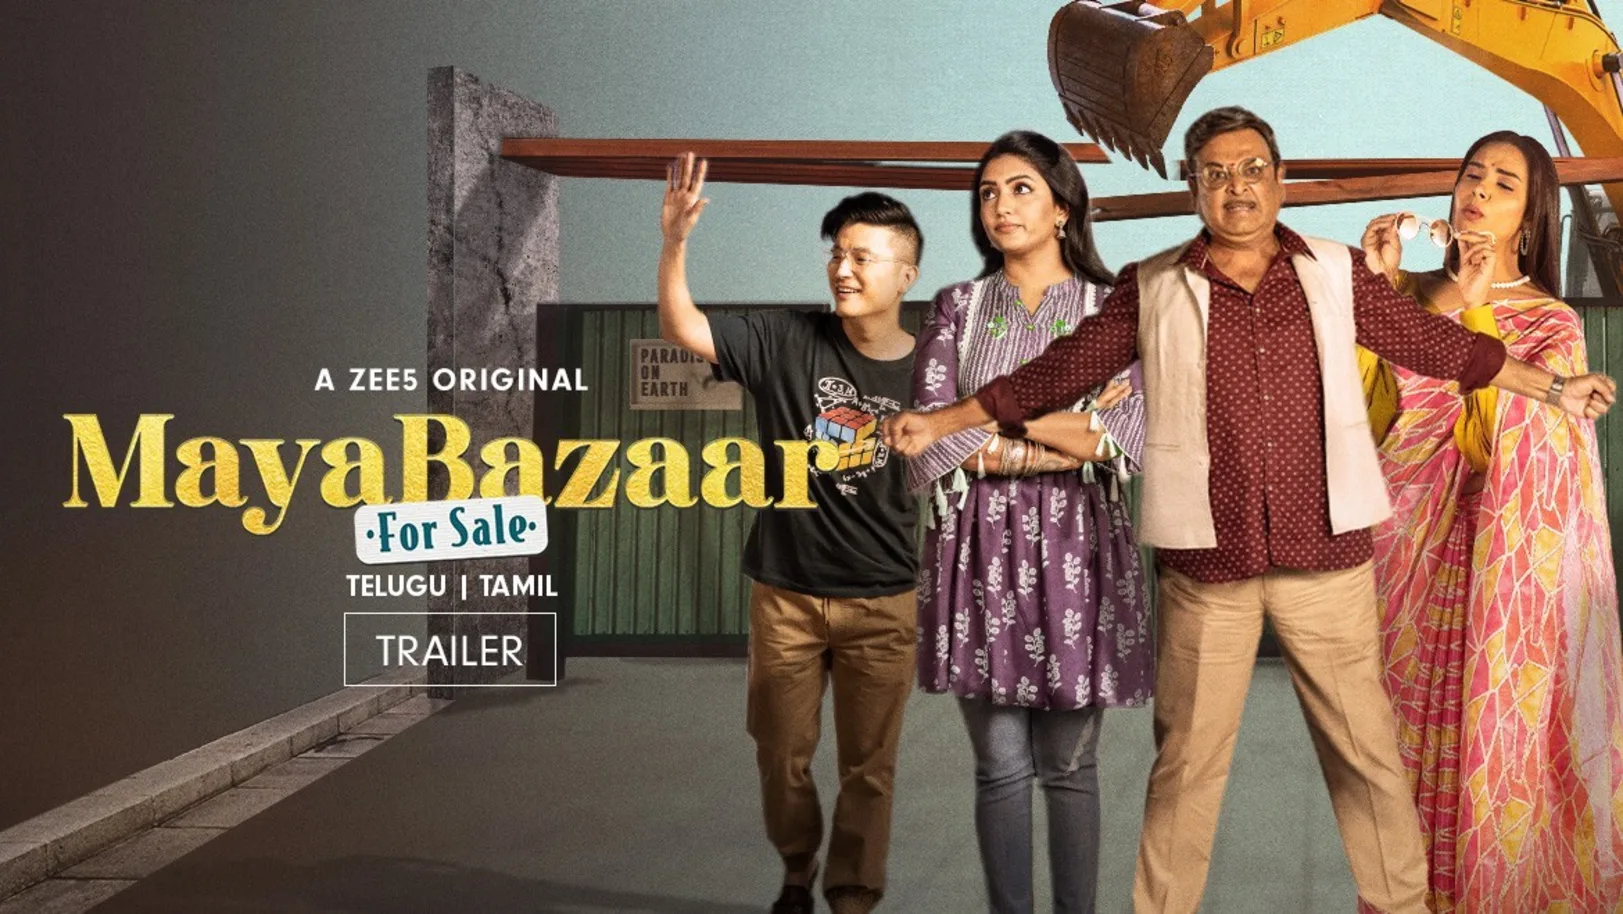 Maya Bazaar - For Sale | Trailer